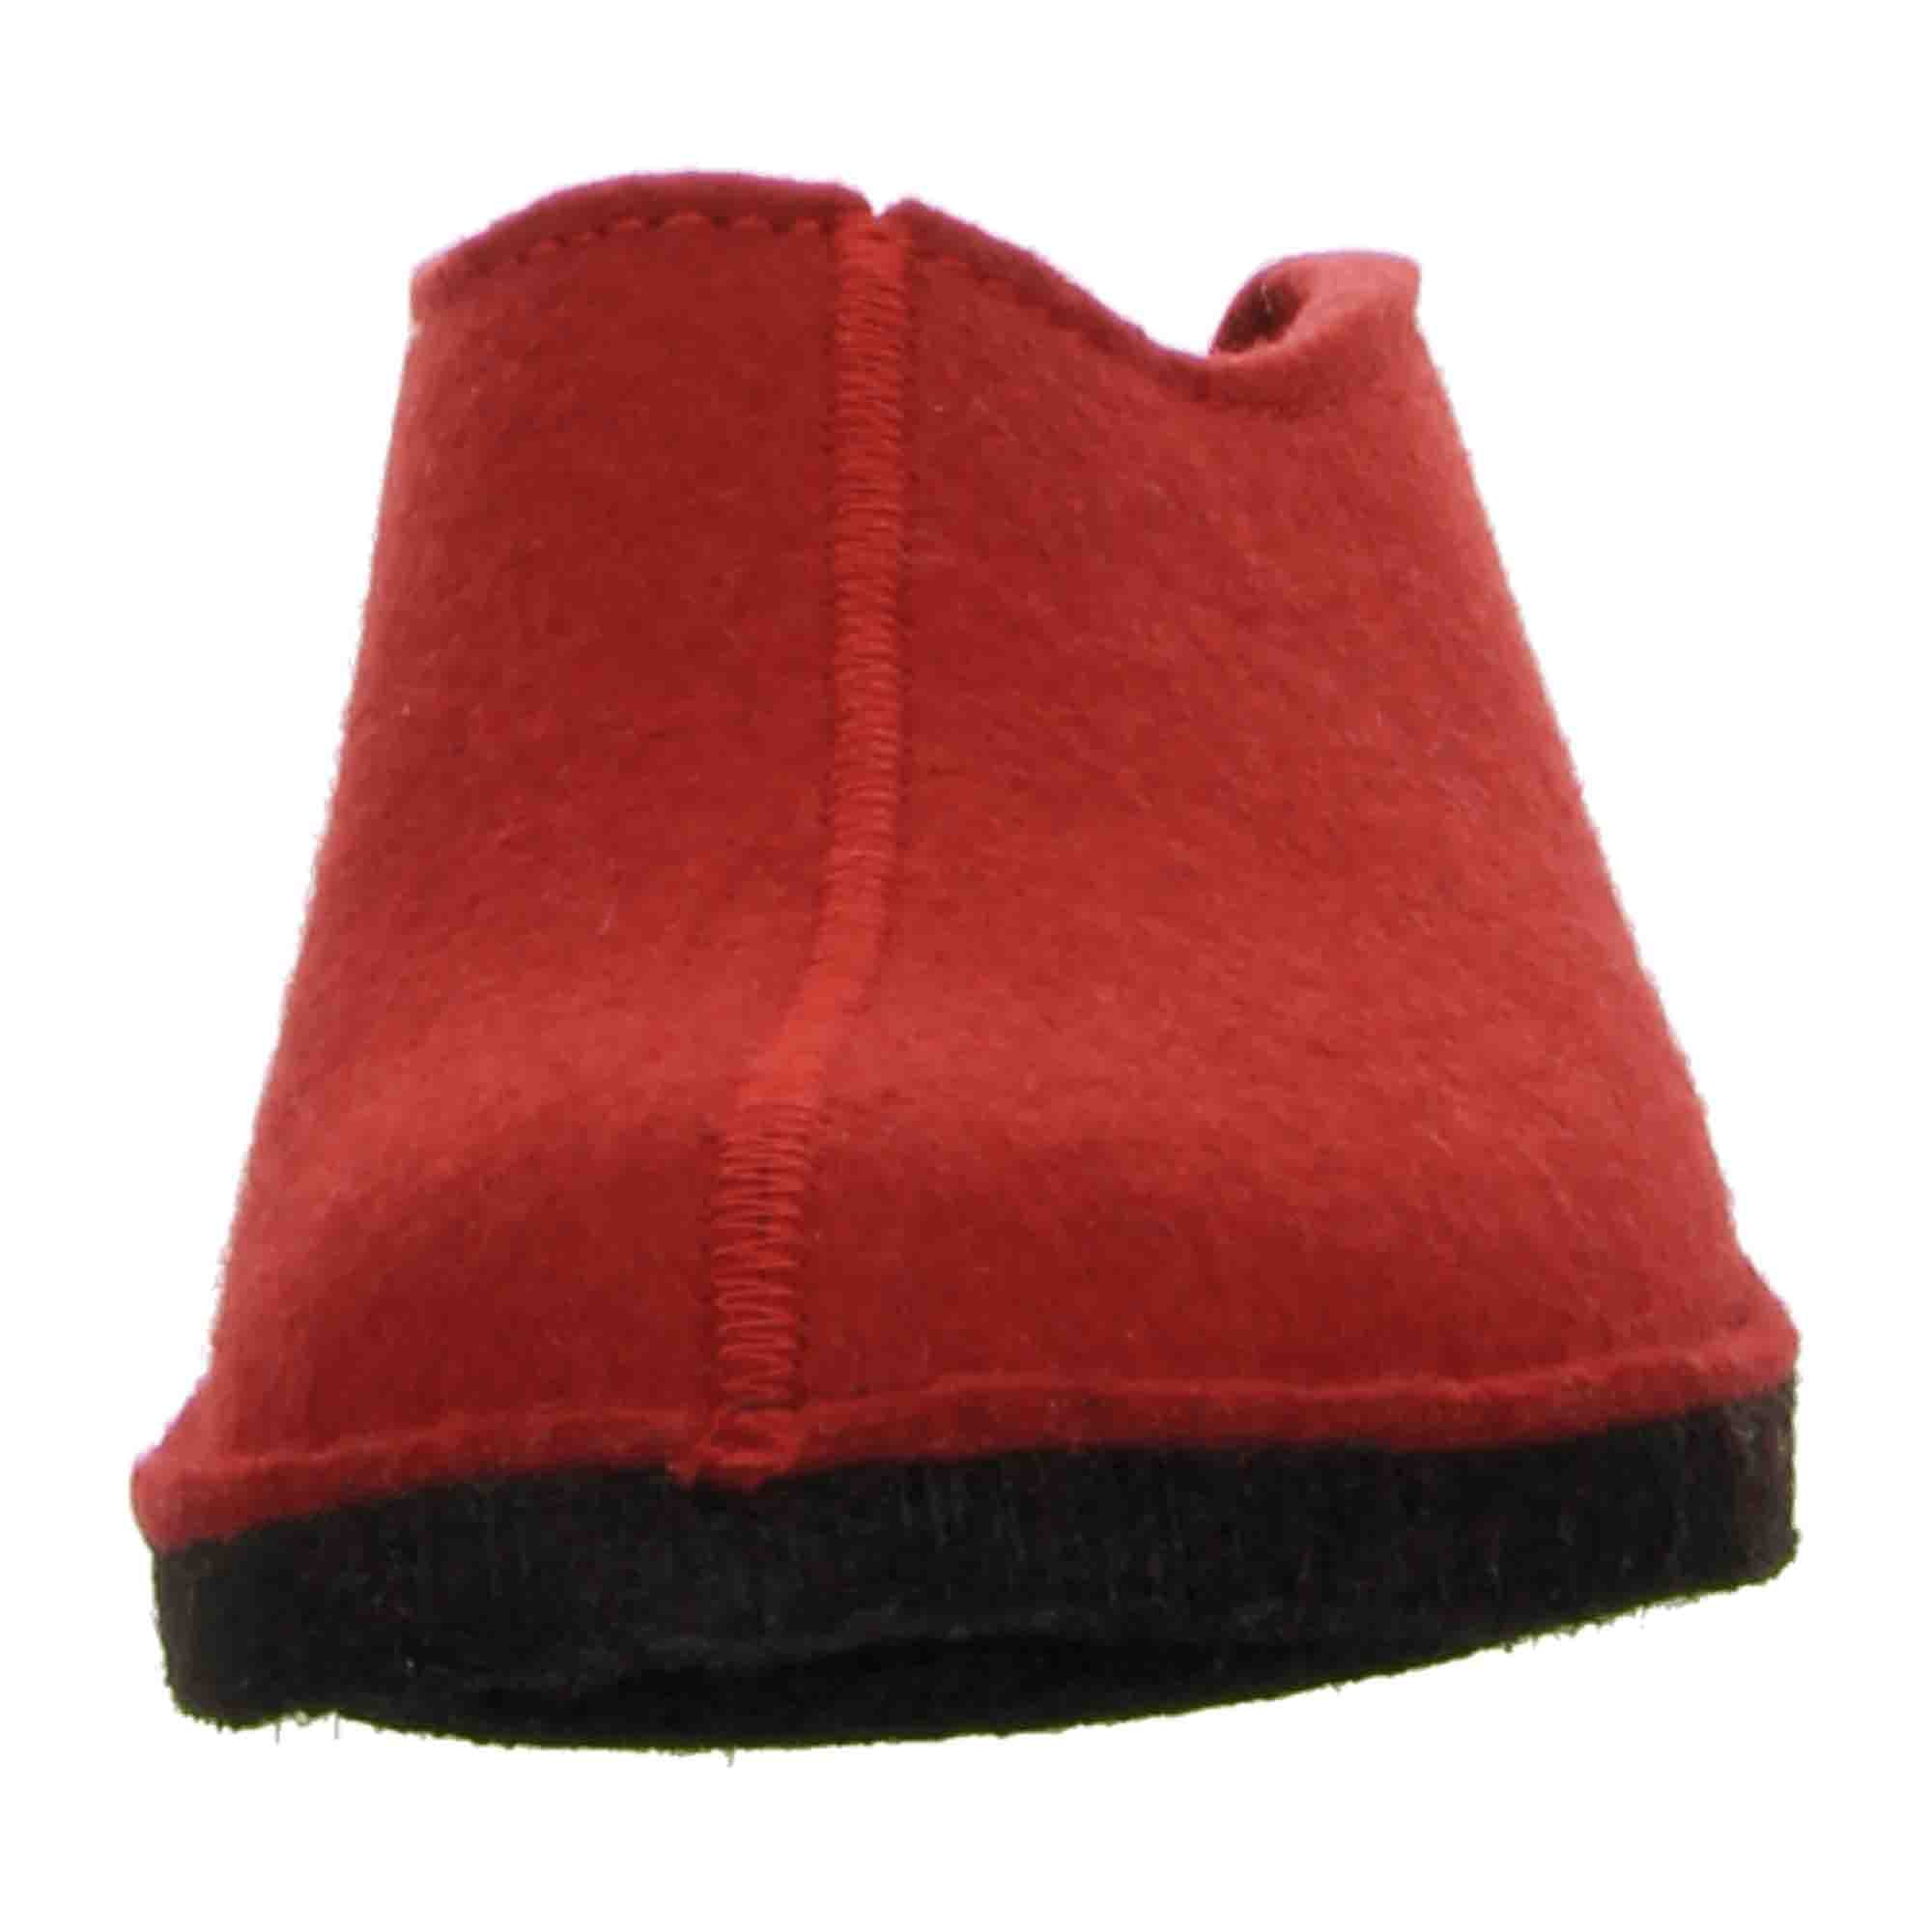 Haflinger Flair Smily Men's Slippers, Vibrant Red - Comfortable & Durable